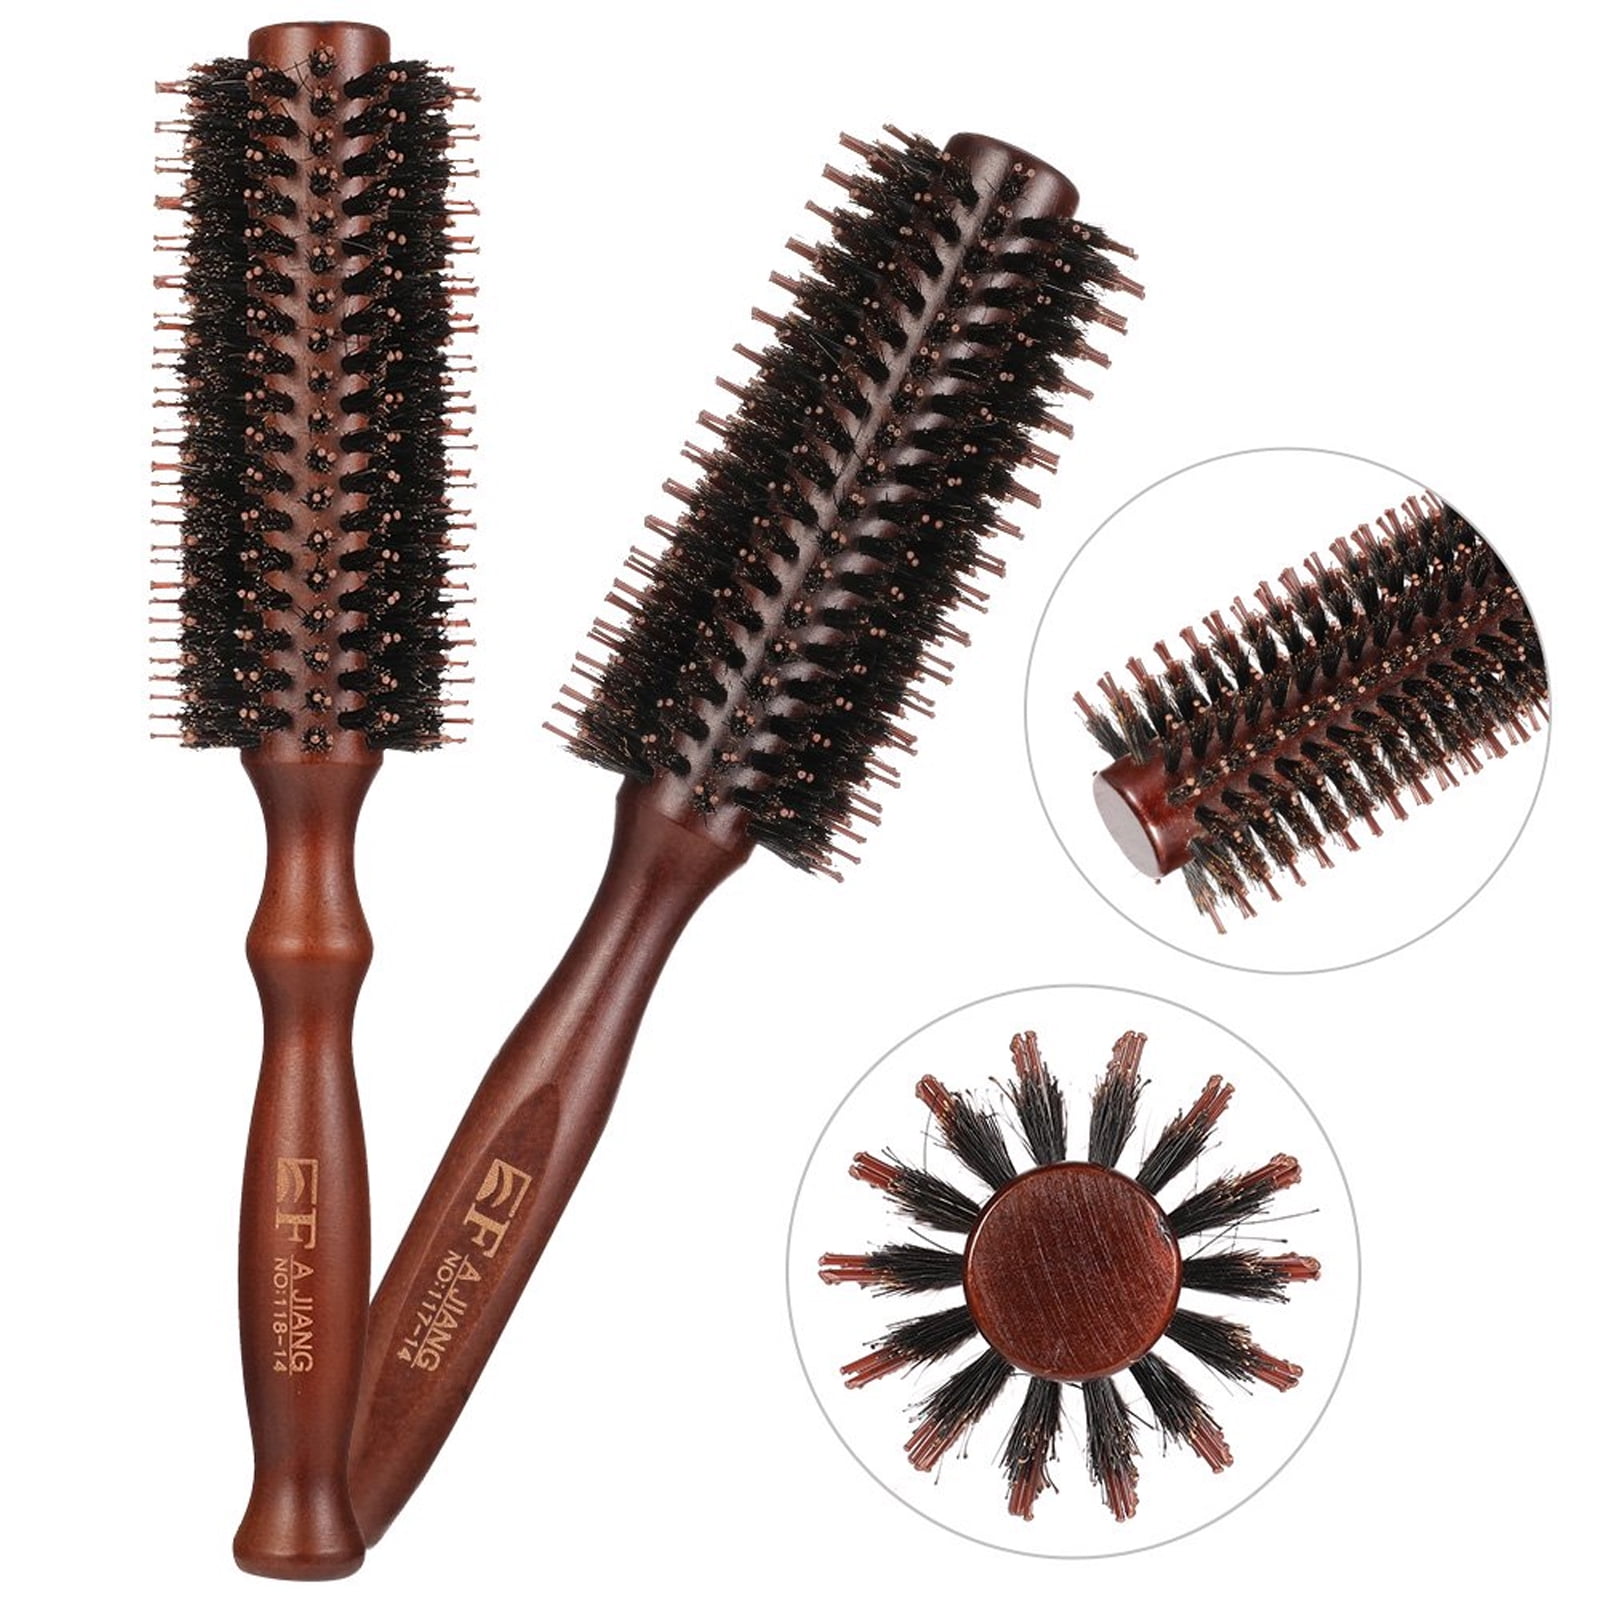 Bossman 2 Round Boar & Nylon Bristle Hair Brush for Blow Dryer, Styling, Curling, Detangling and Straightening